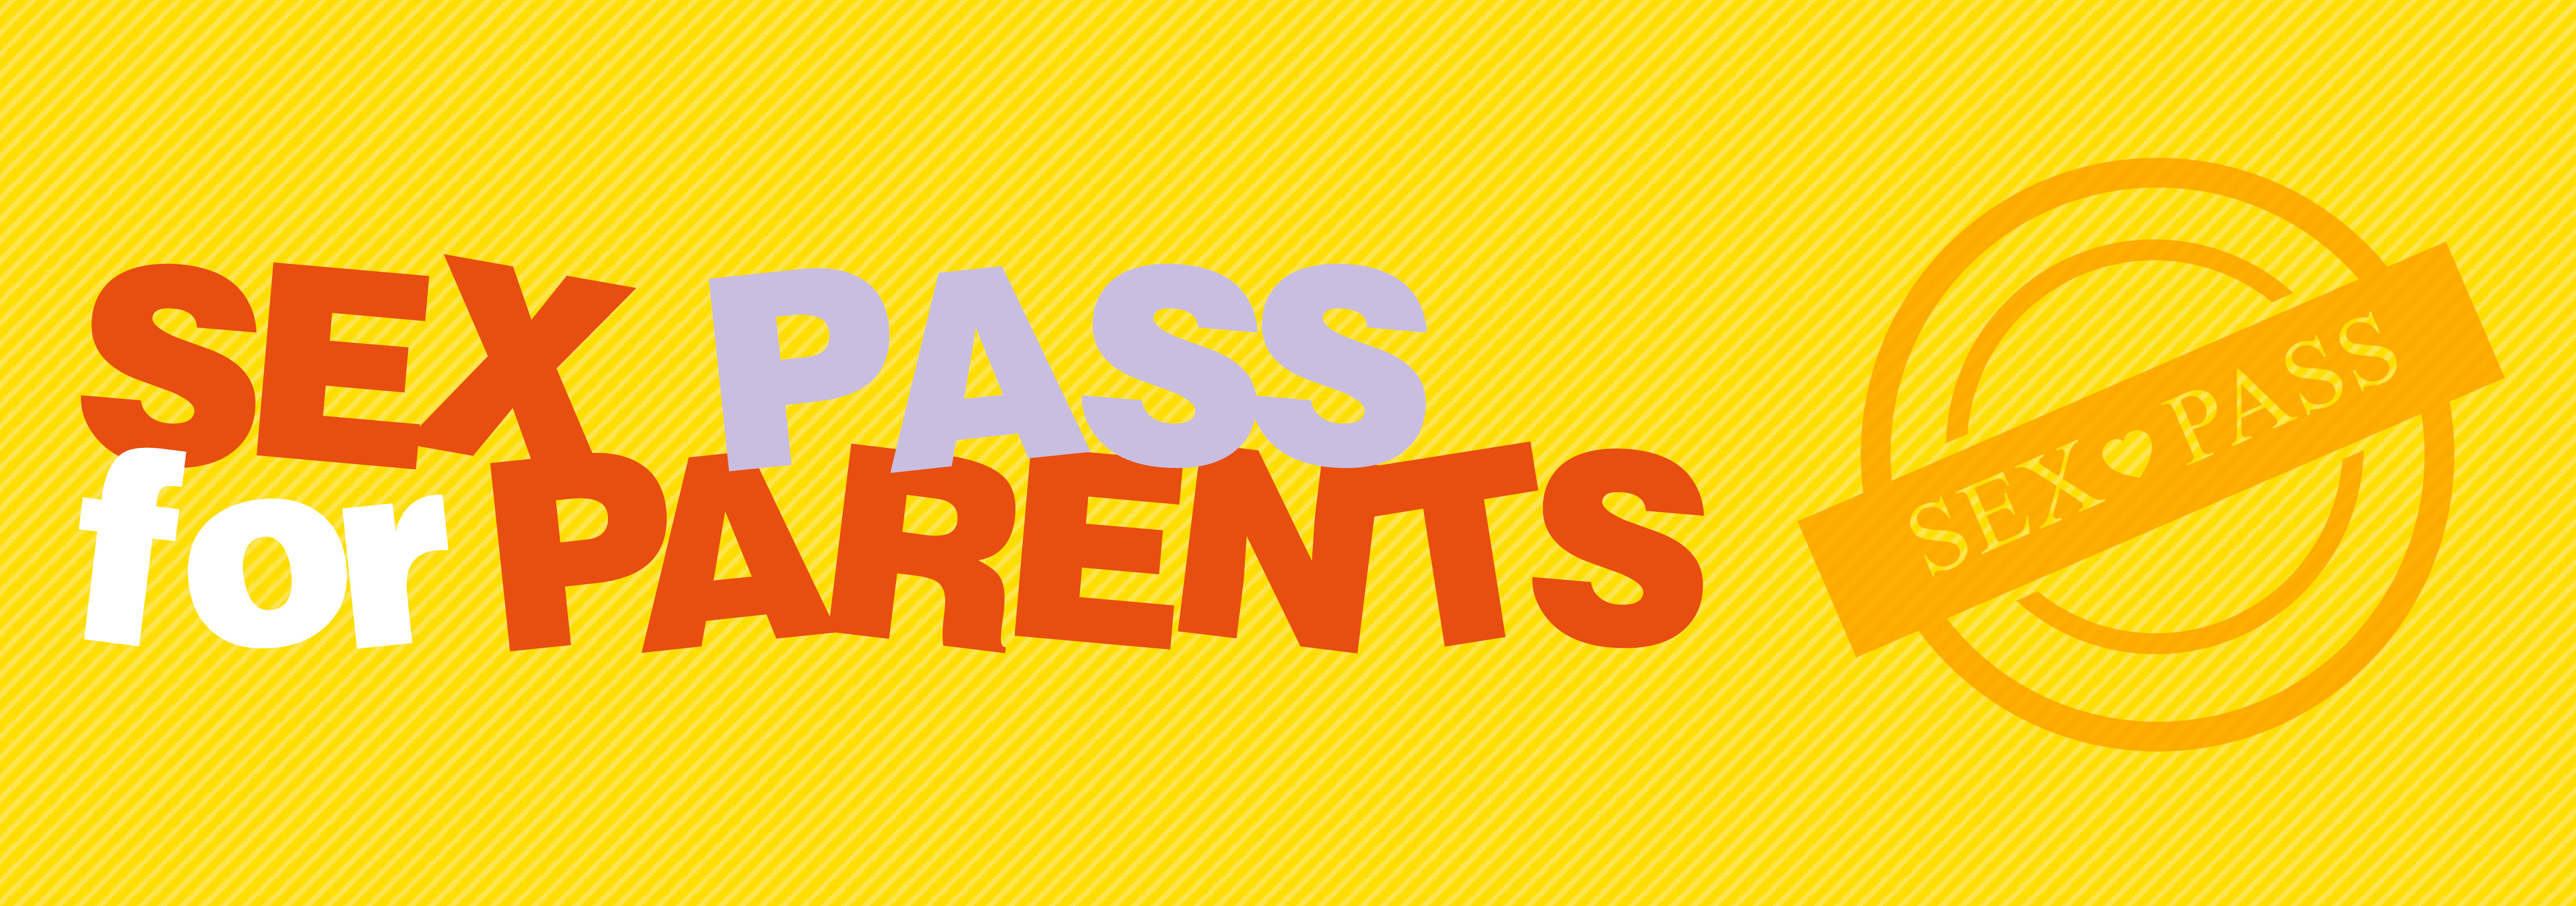 sexpass_for-parents